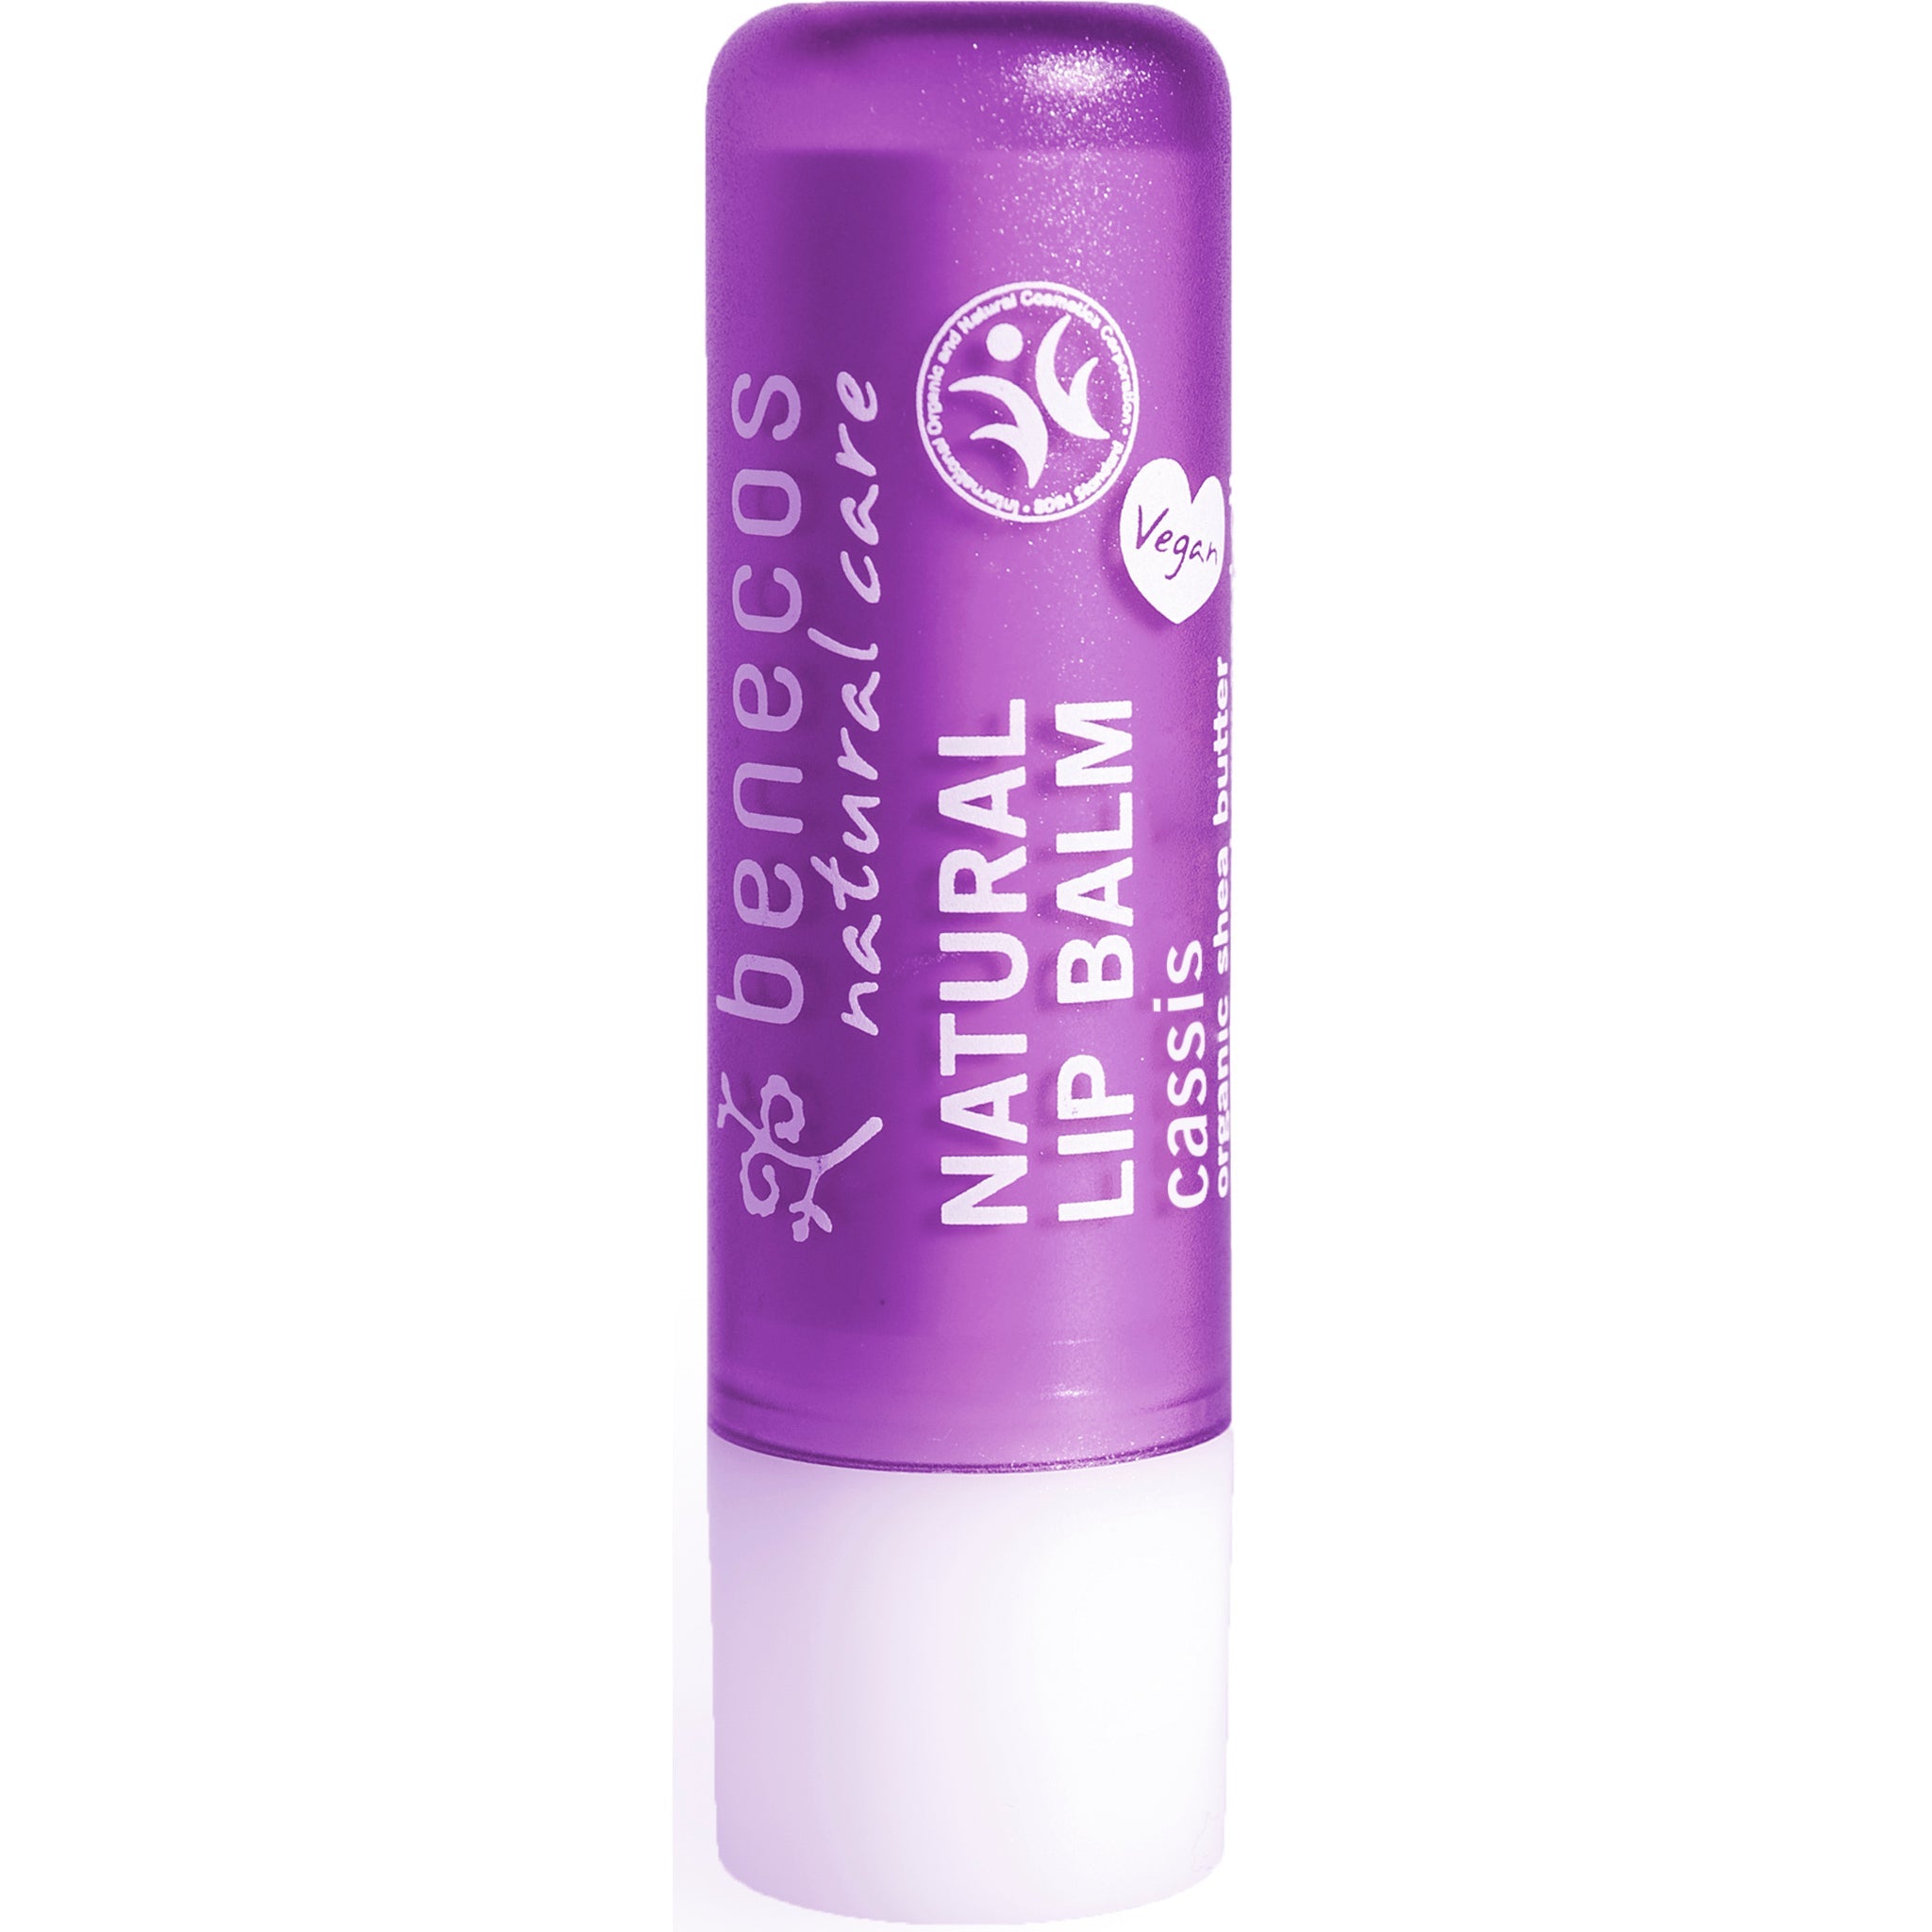 Natural Lip Balm - Casis - mypure.co.uk